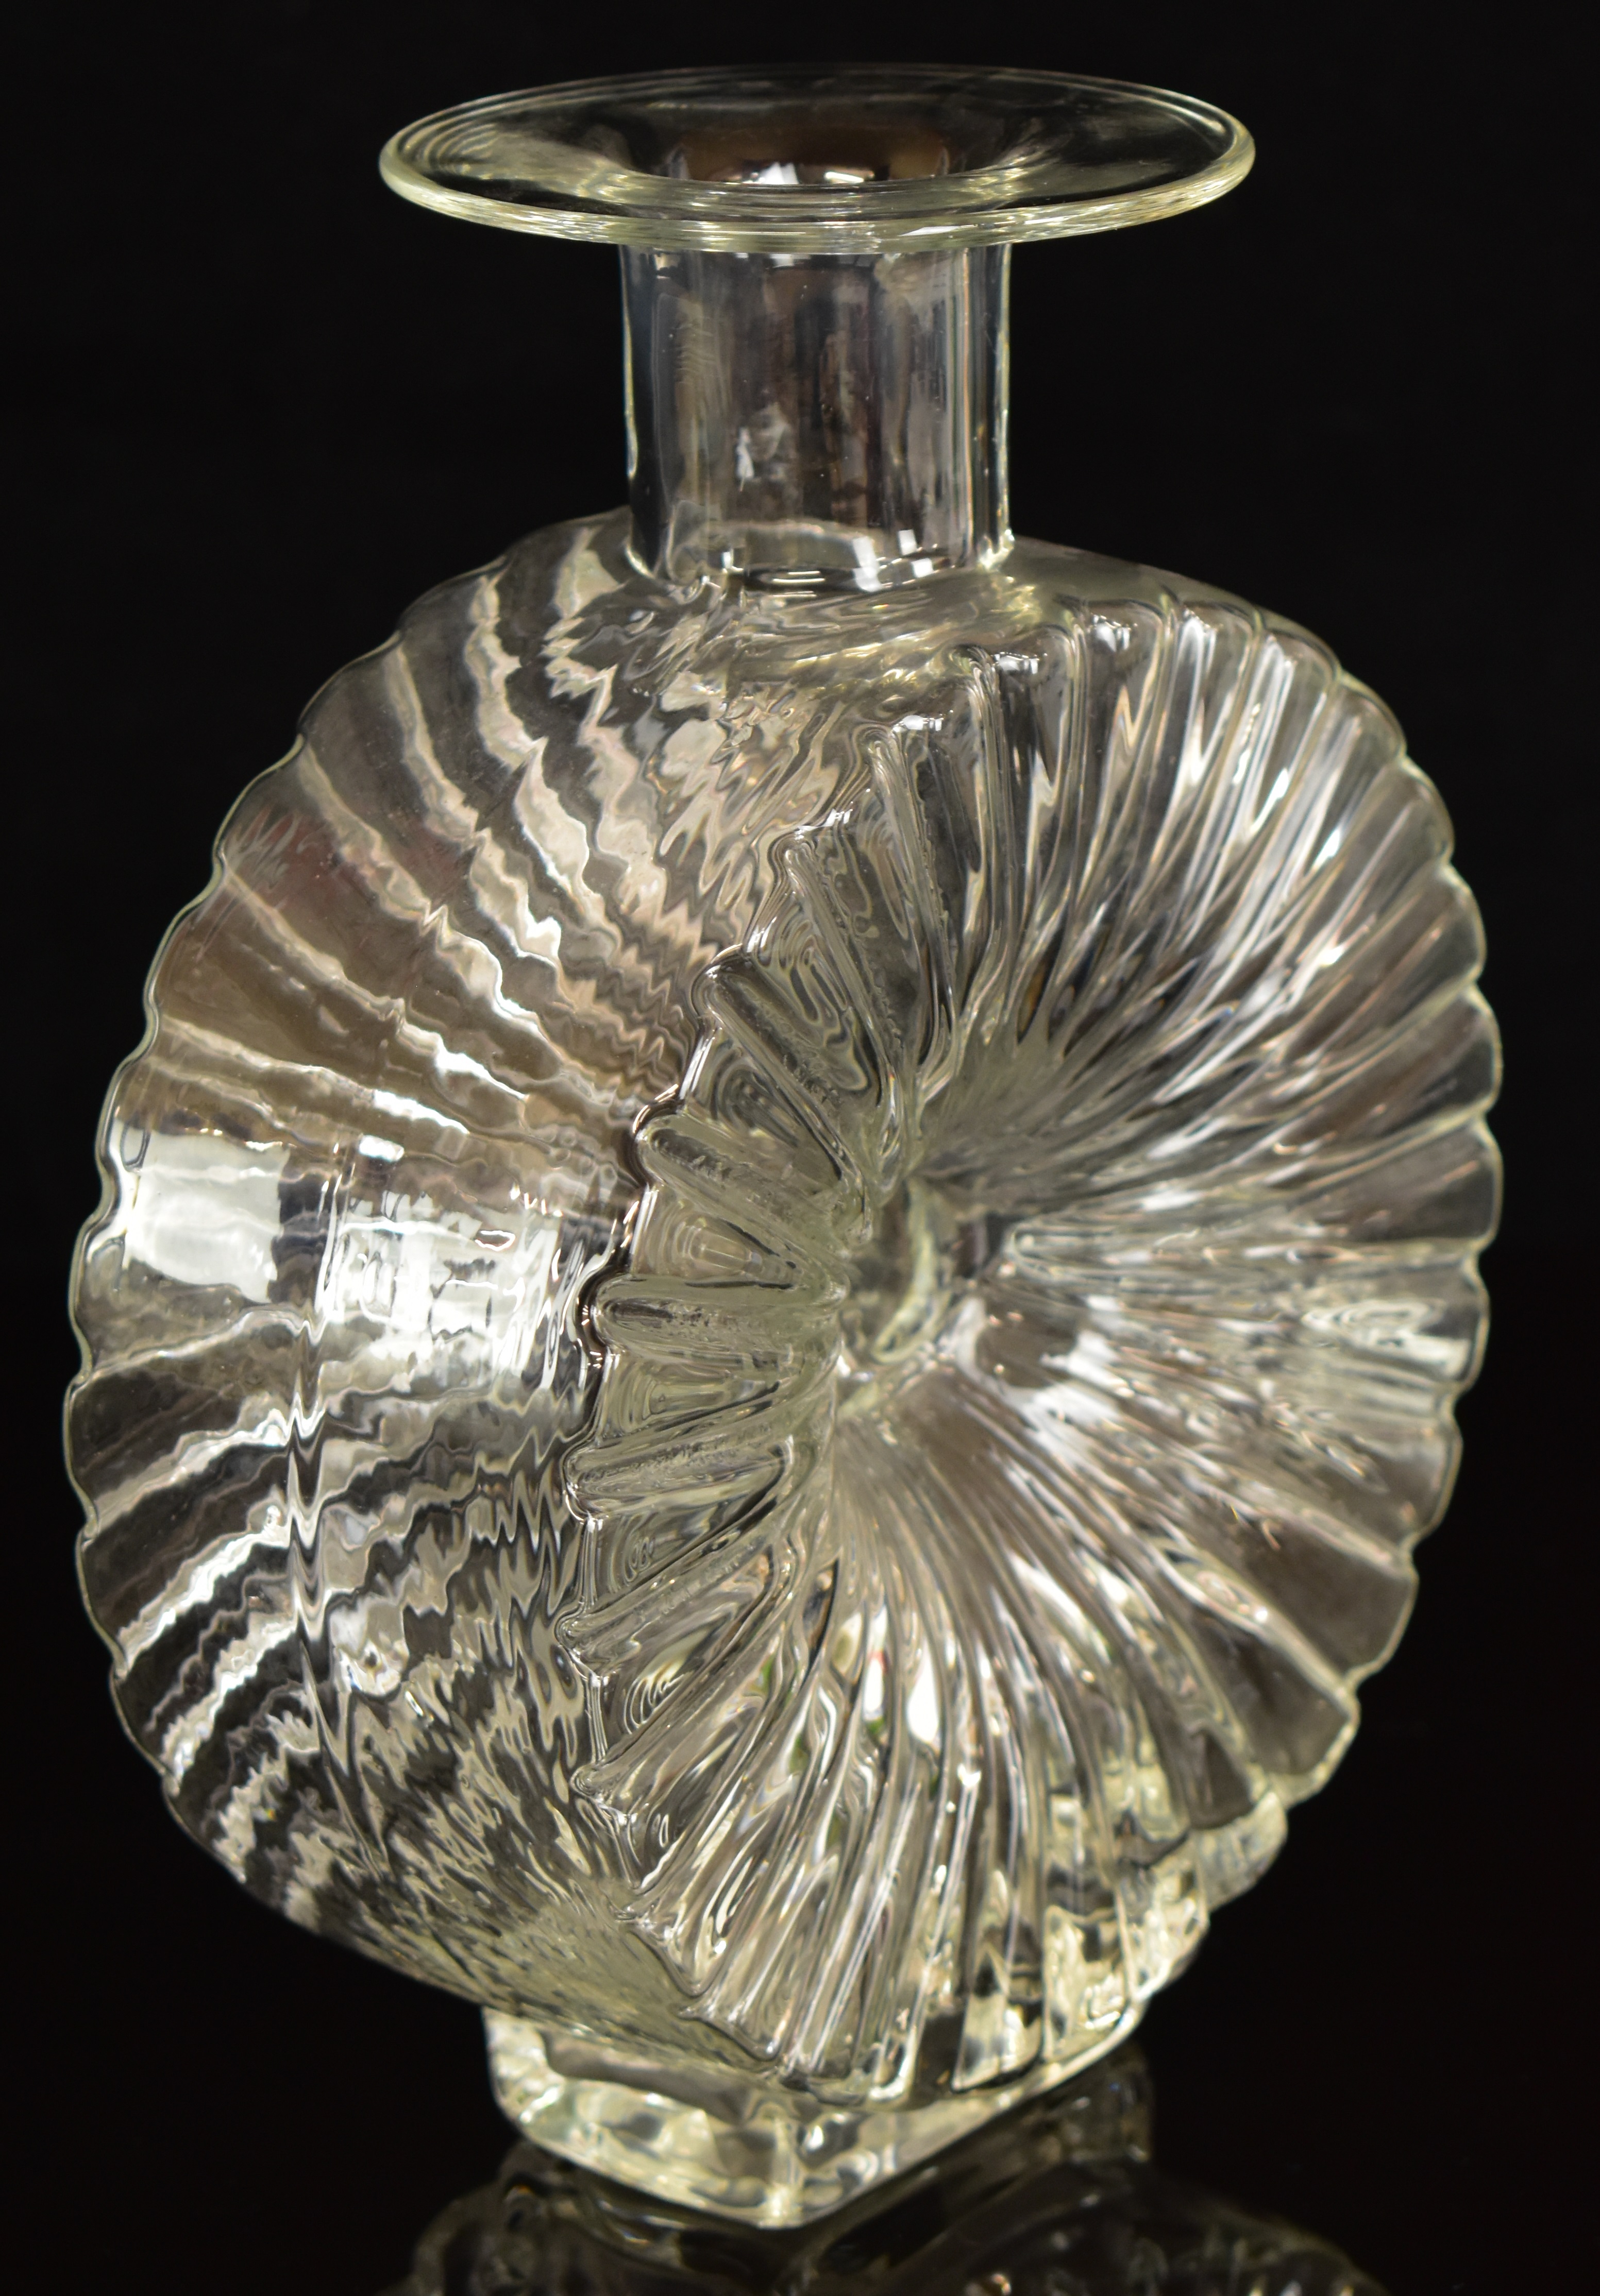 Helena Tynell for Riihimaen Lasi Riihimaki Aurinkopullo Sun Bottle clear glass vase, 23cm tall. - Image 2 of 4